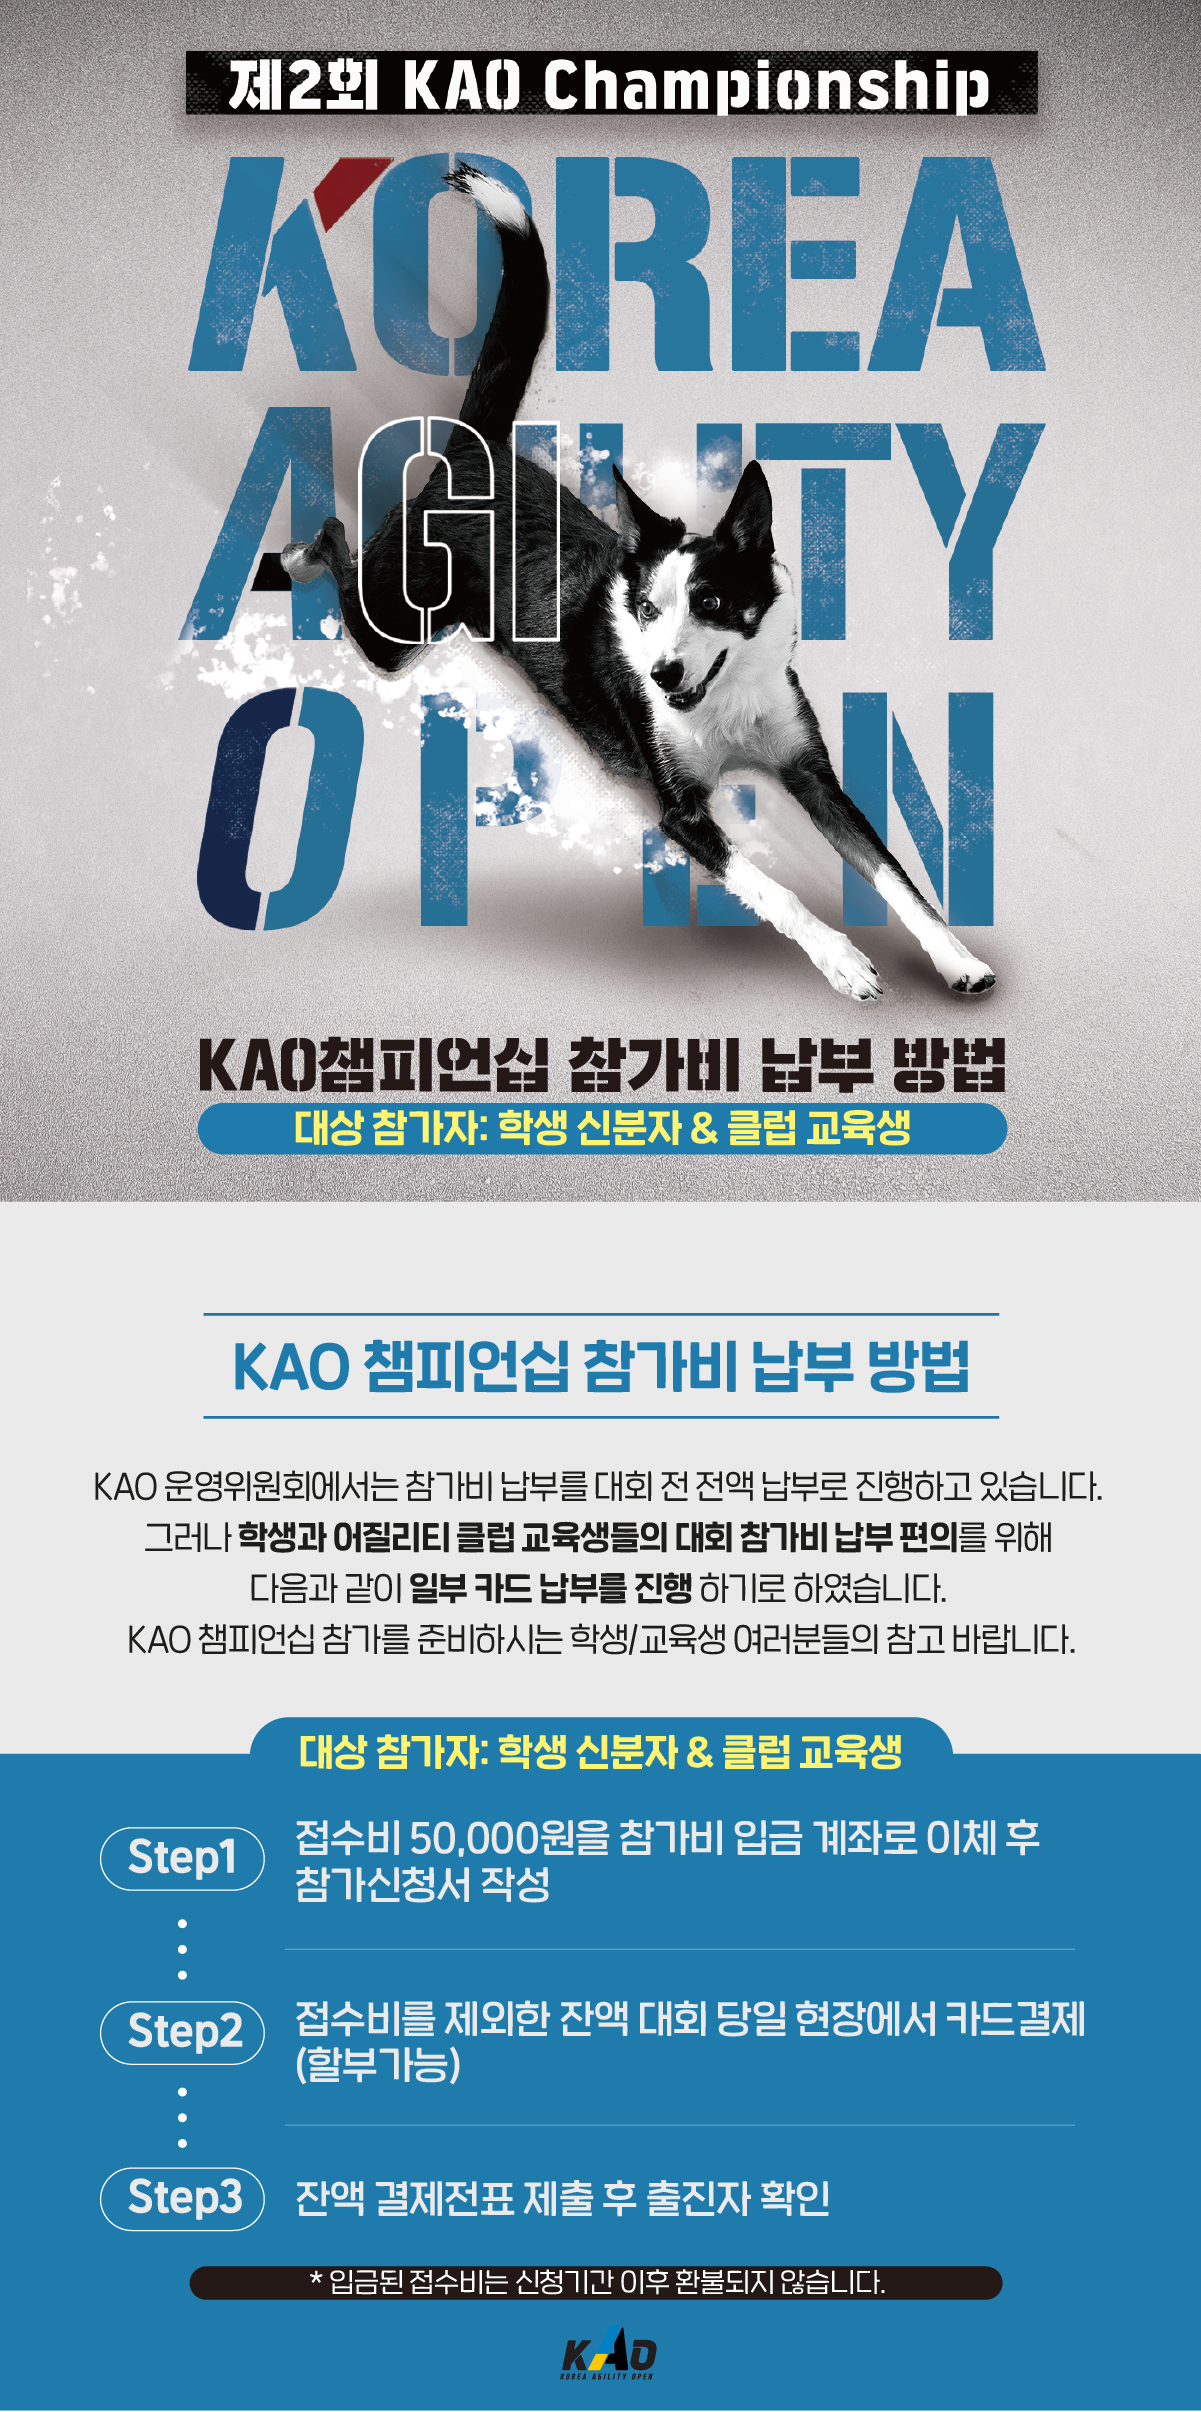 KAO 챔피언십 참가비 납부 방법